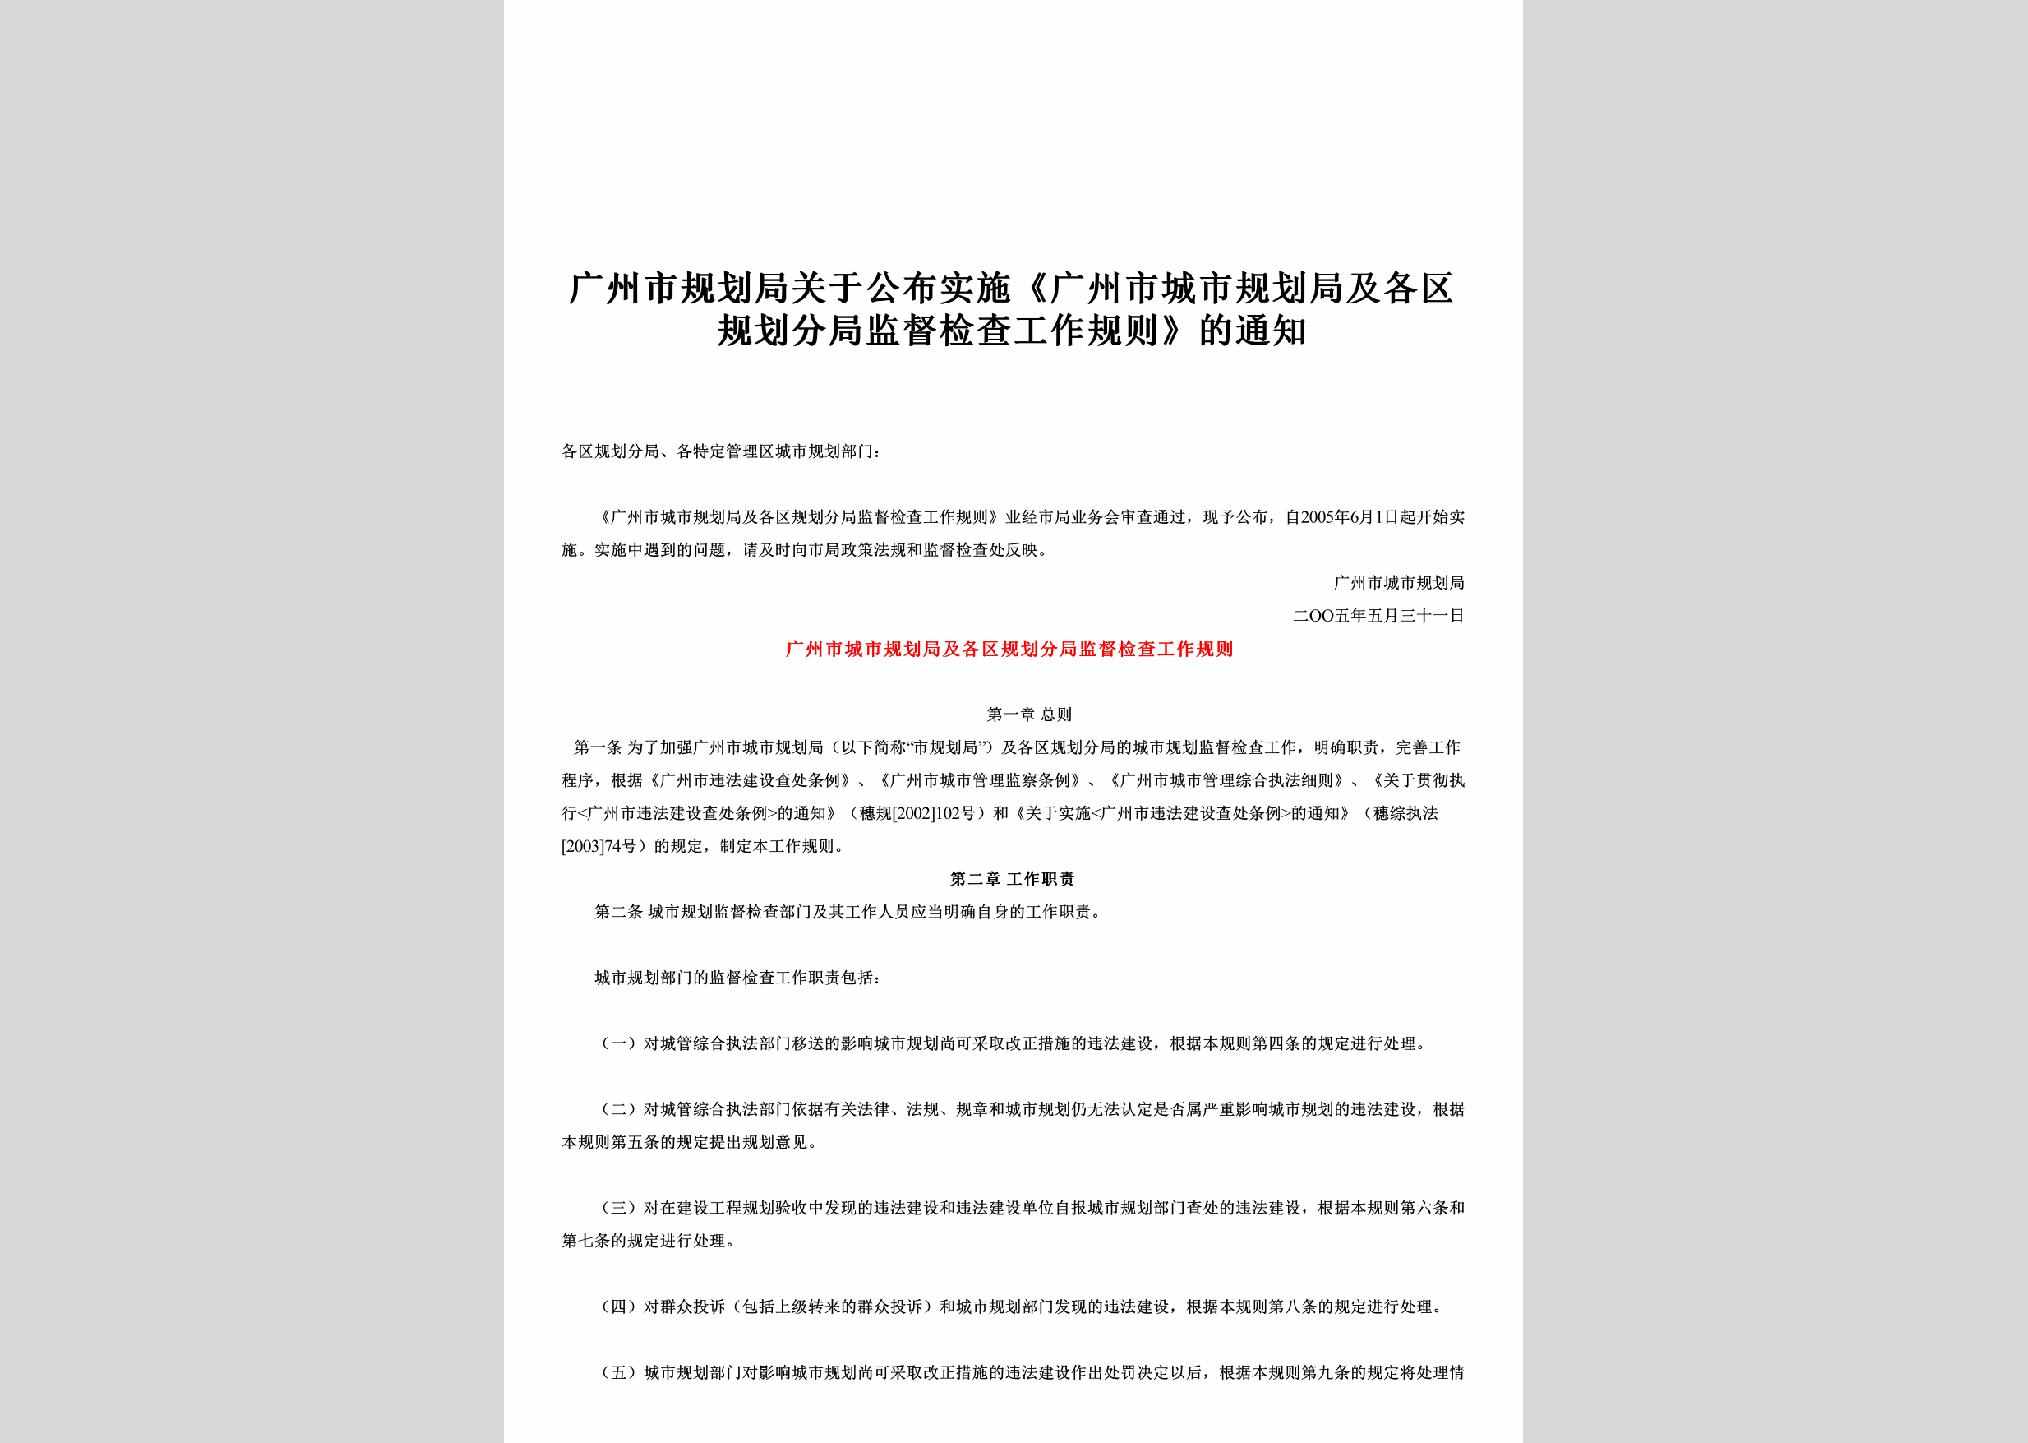 GD-GHJDJCTZ-2005：关于公布实施《广州市城市规划局及各区规划分局监督检查工作规则》的通知